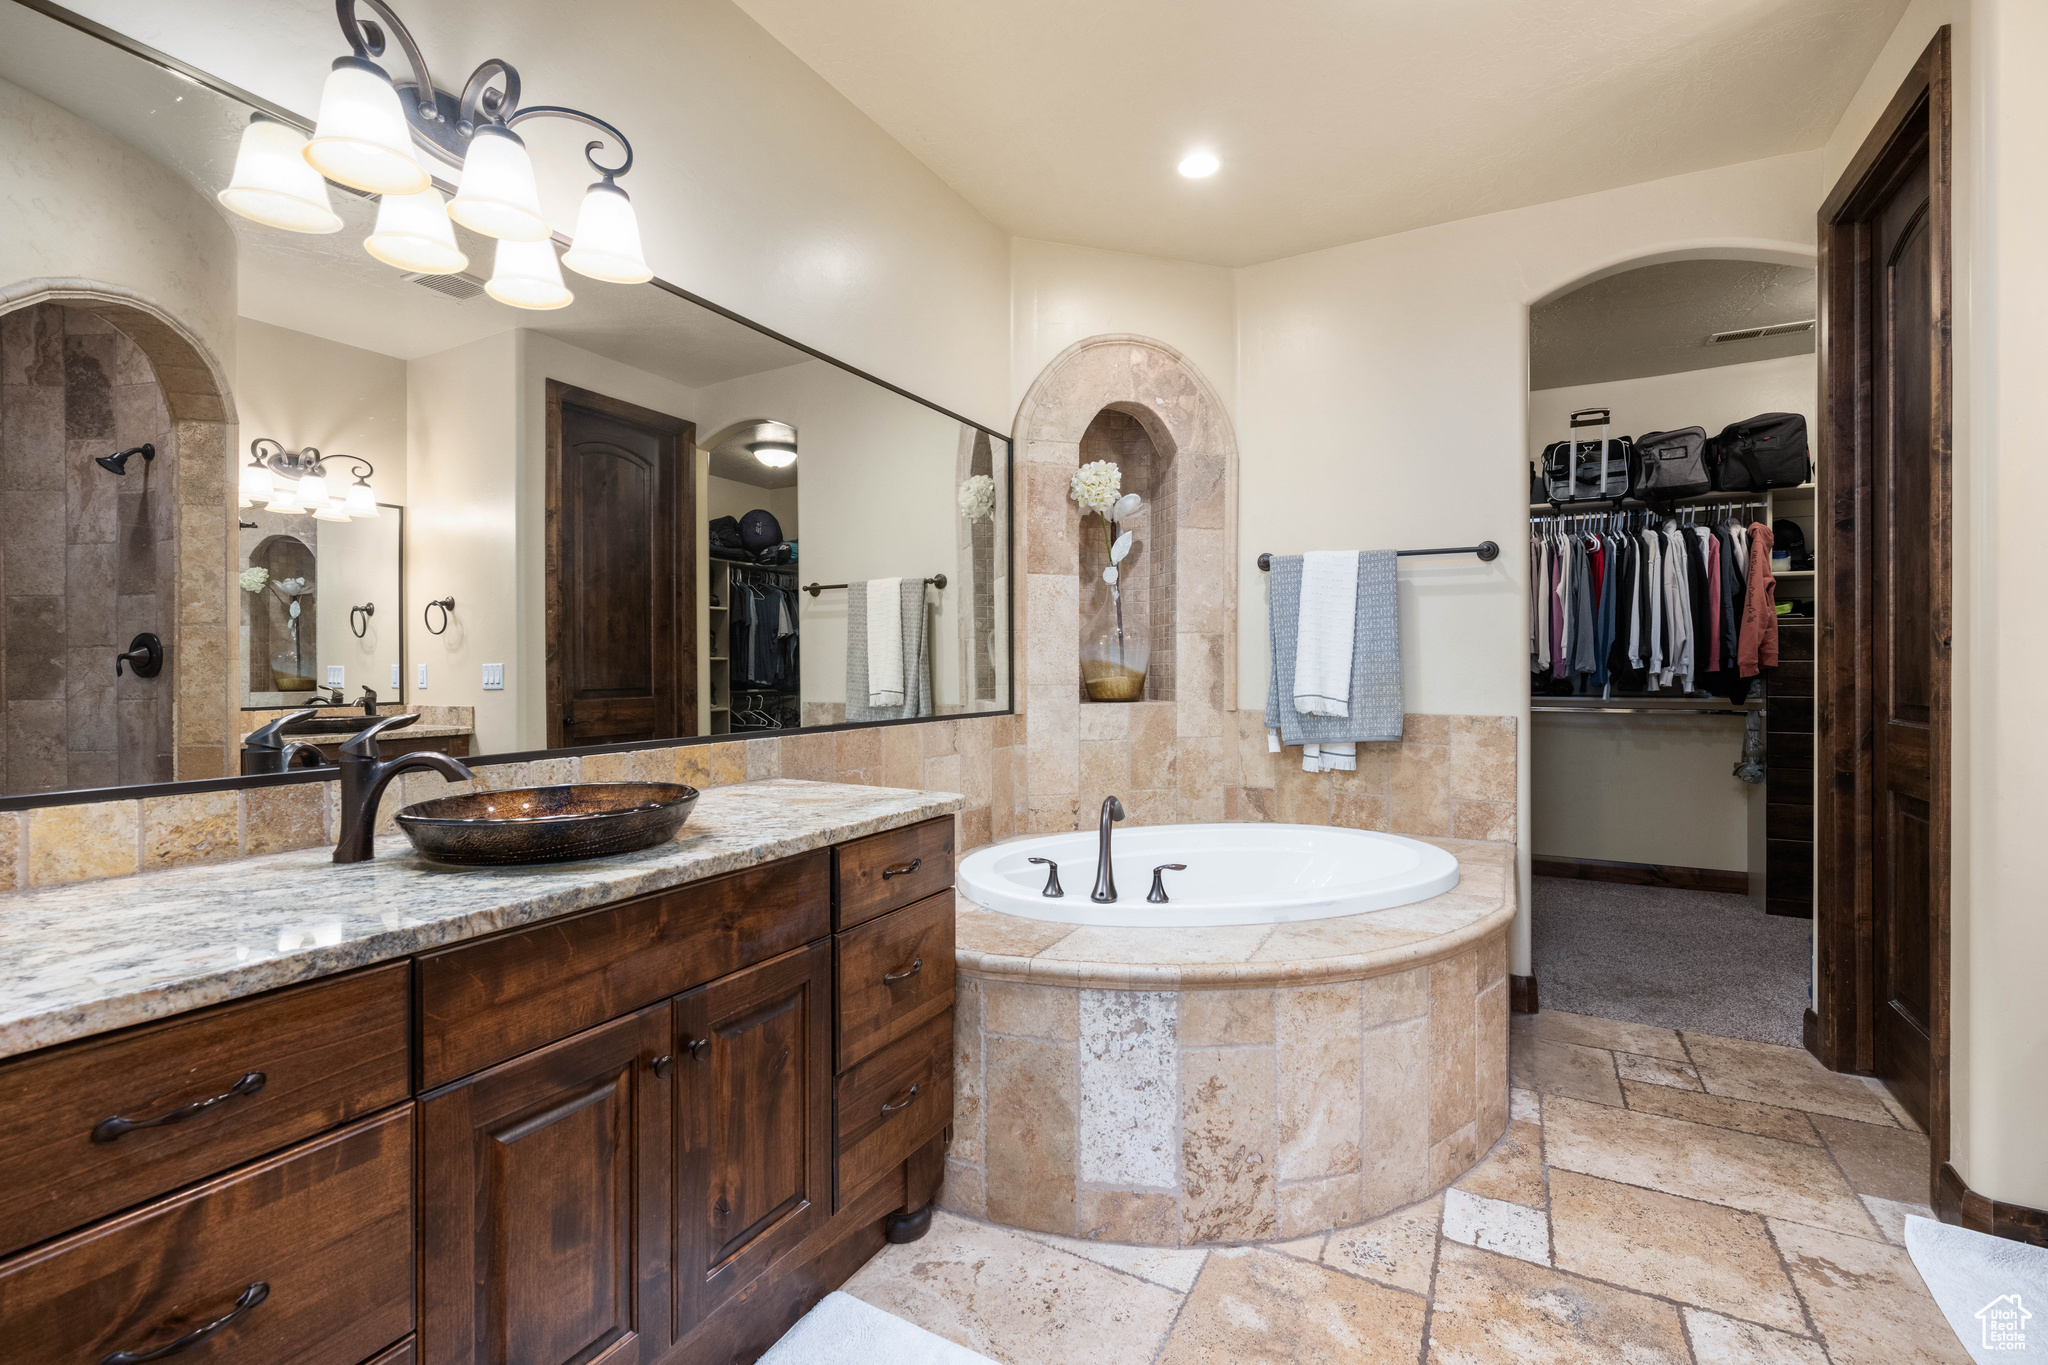 Bathroom with vanity, tile floors, and tiled tub